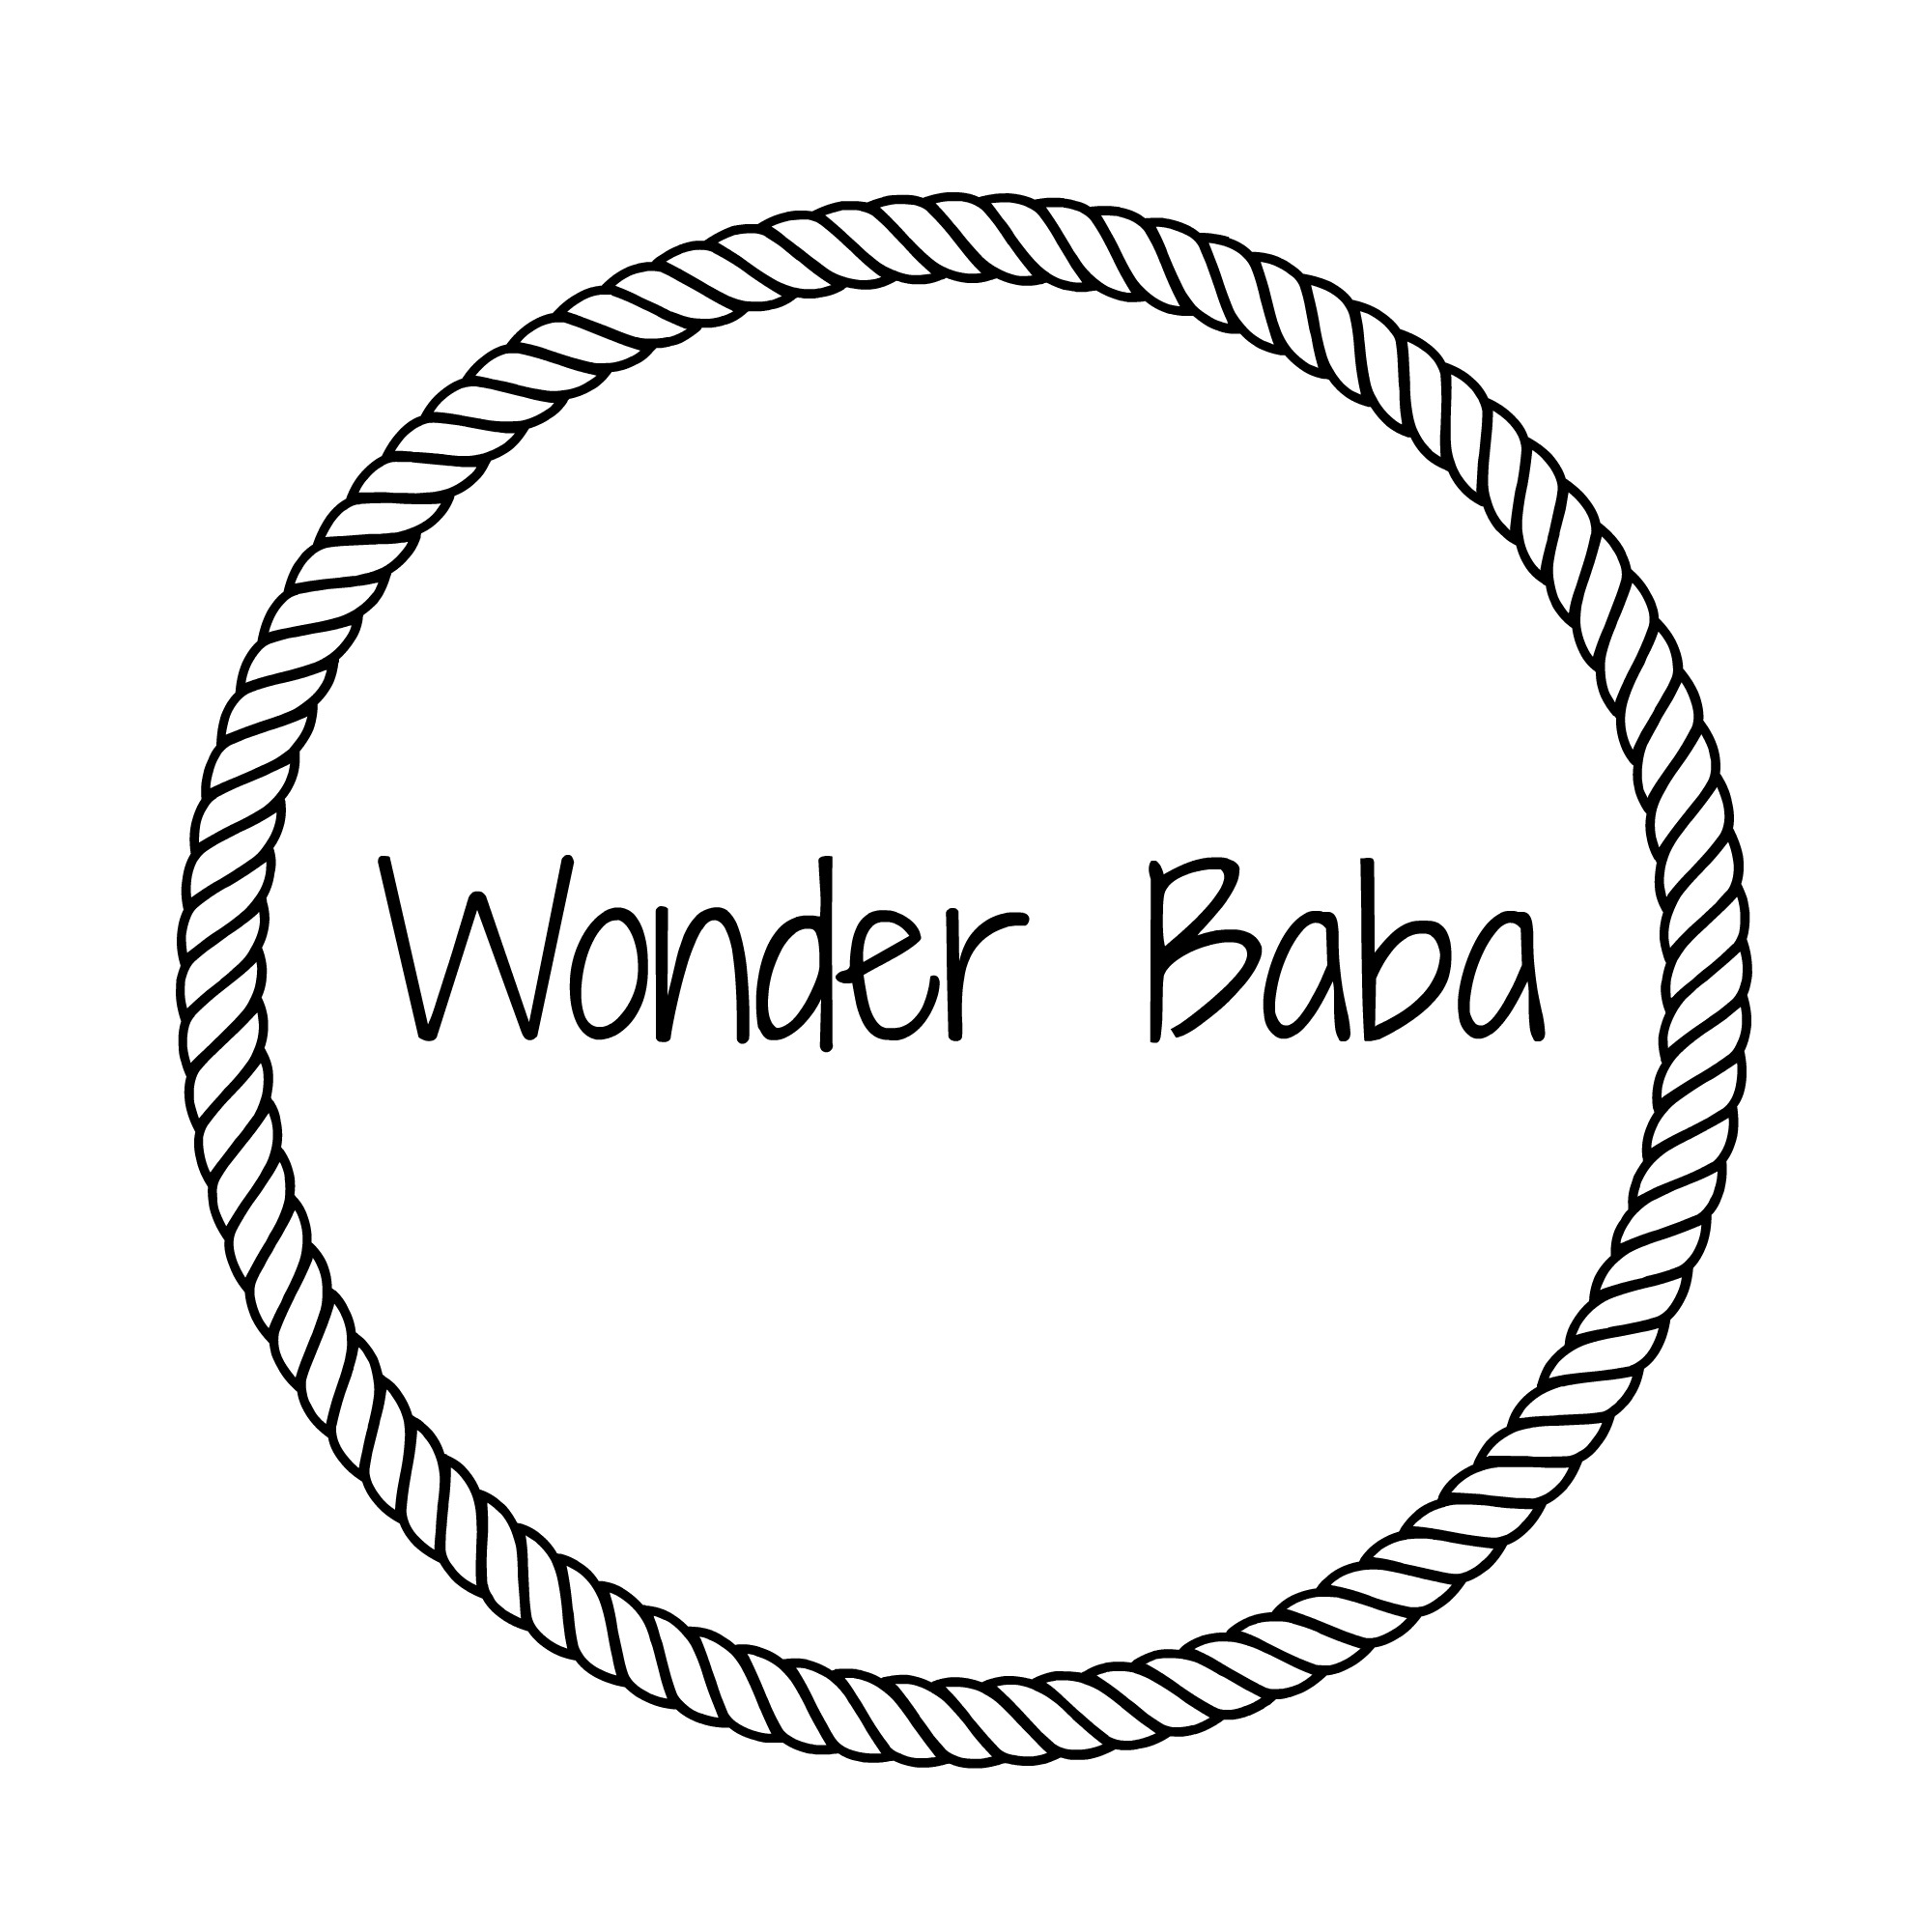 (c) Wonderbaba.wordpress.com